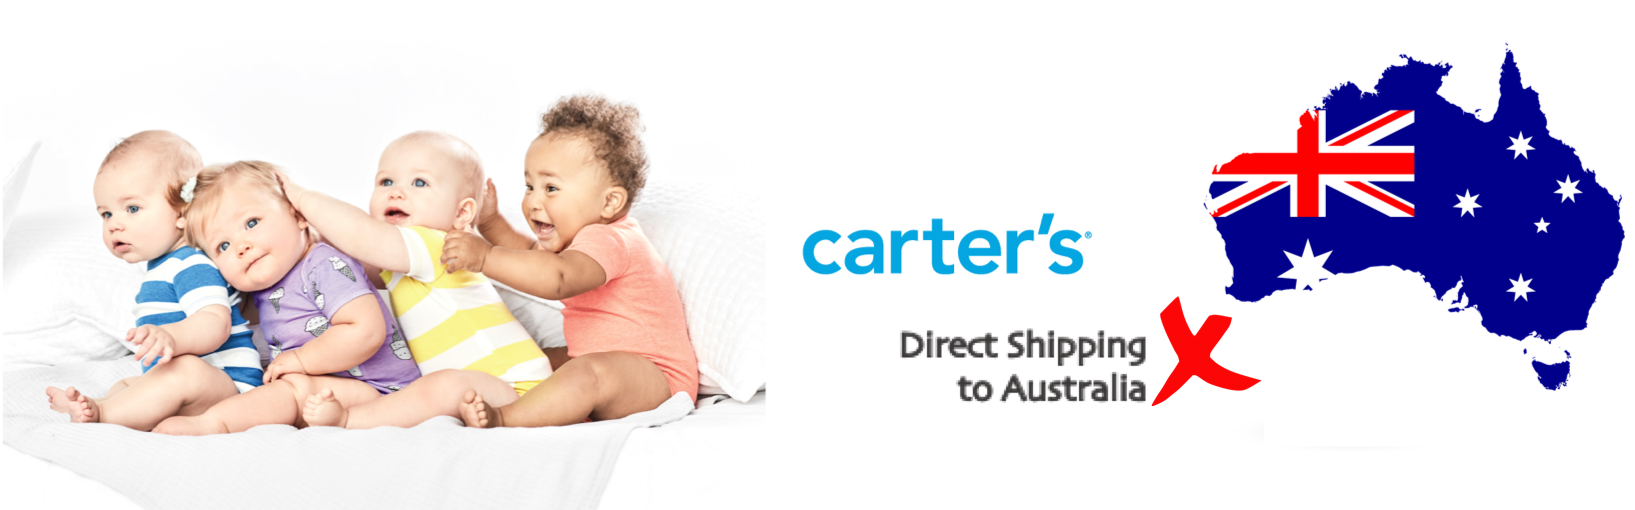 shop carter's ship to Australia